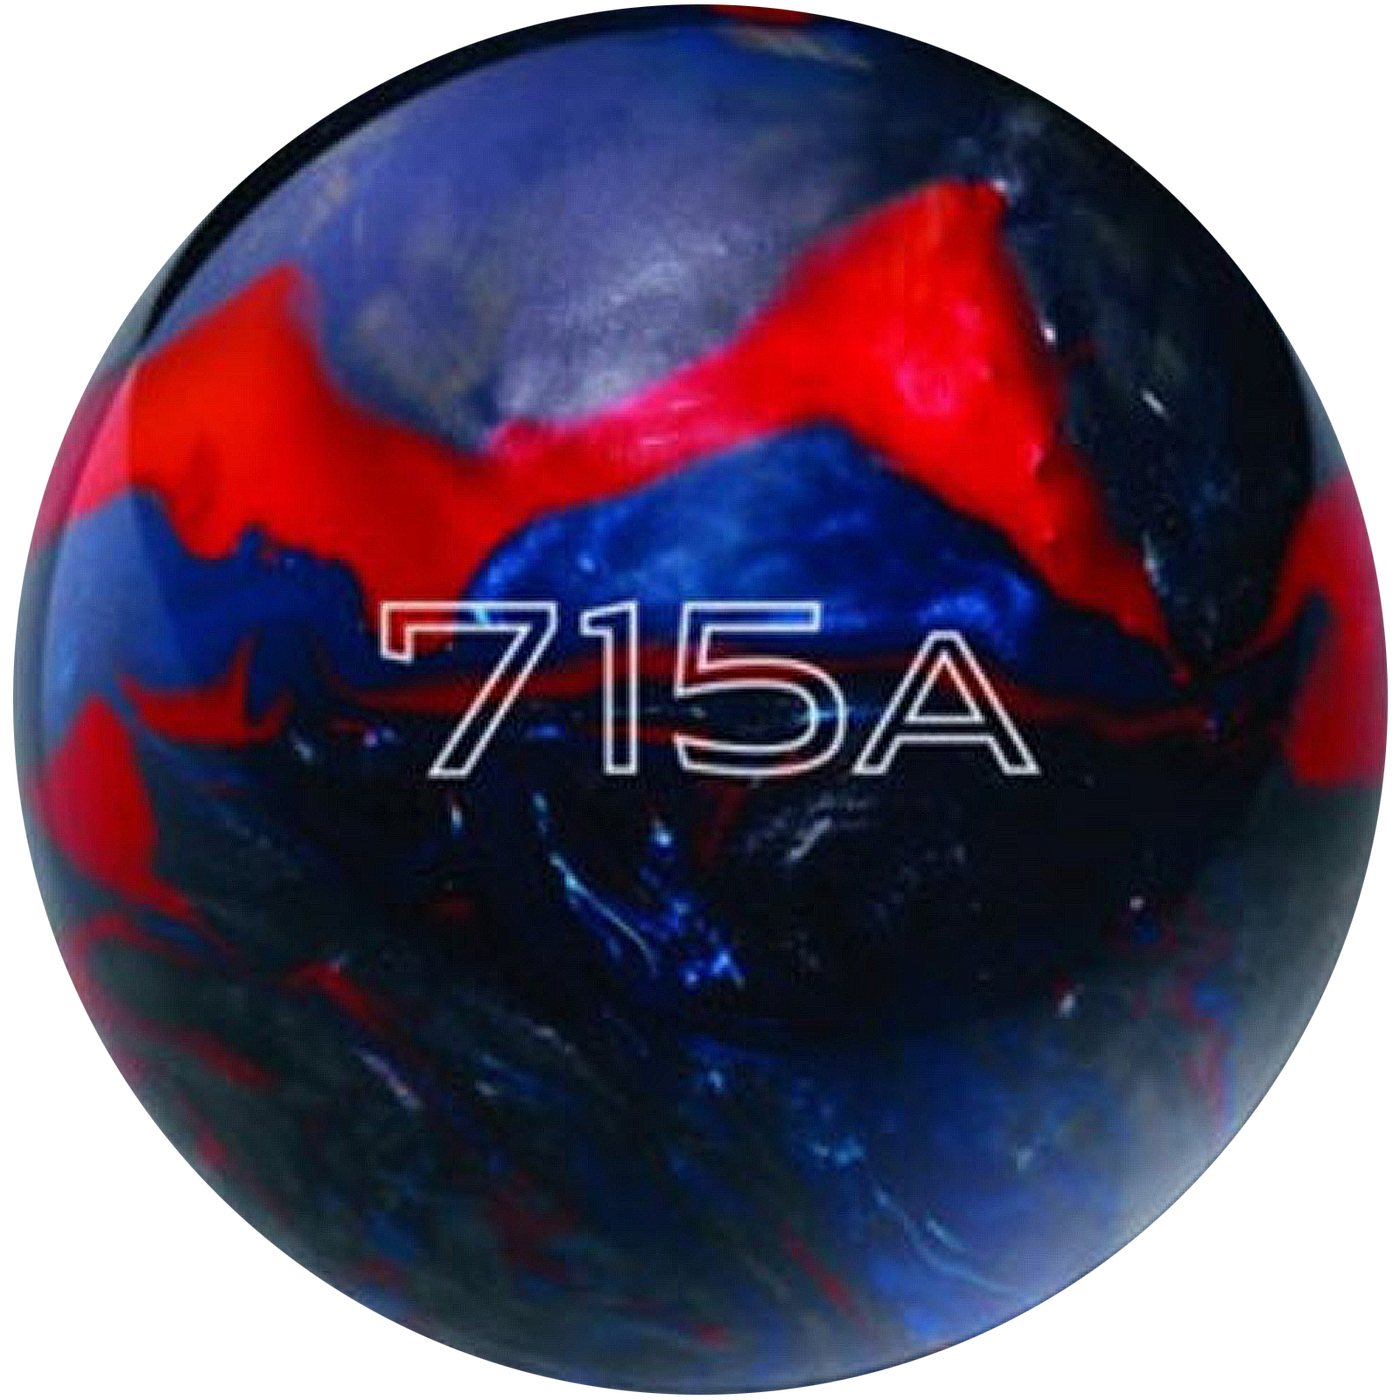 715A Bowling Ball